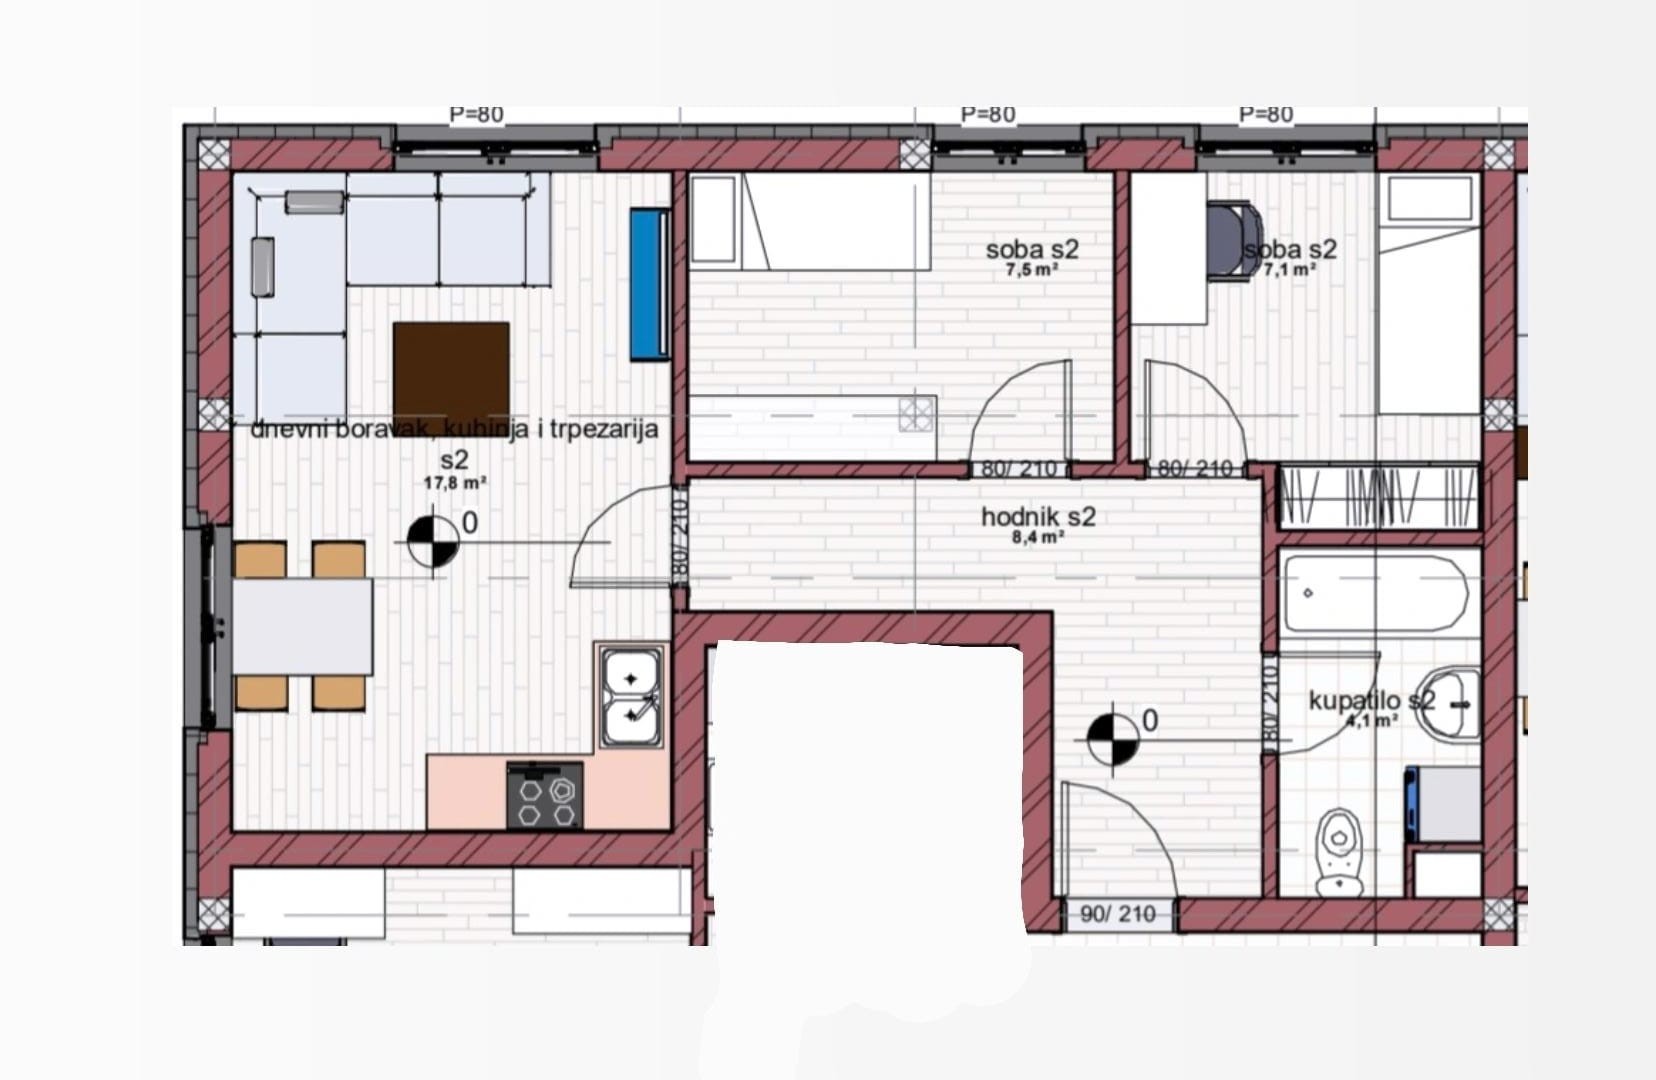 Apartment, Two and a half-room apartment<br>46 m<sup>2</sup>, Tatarsko brdo